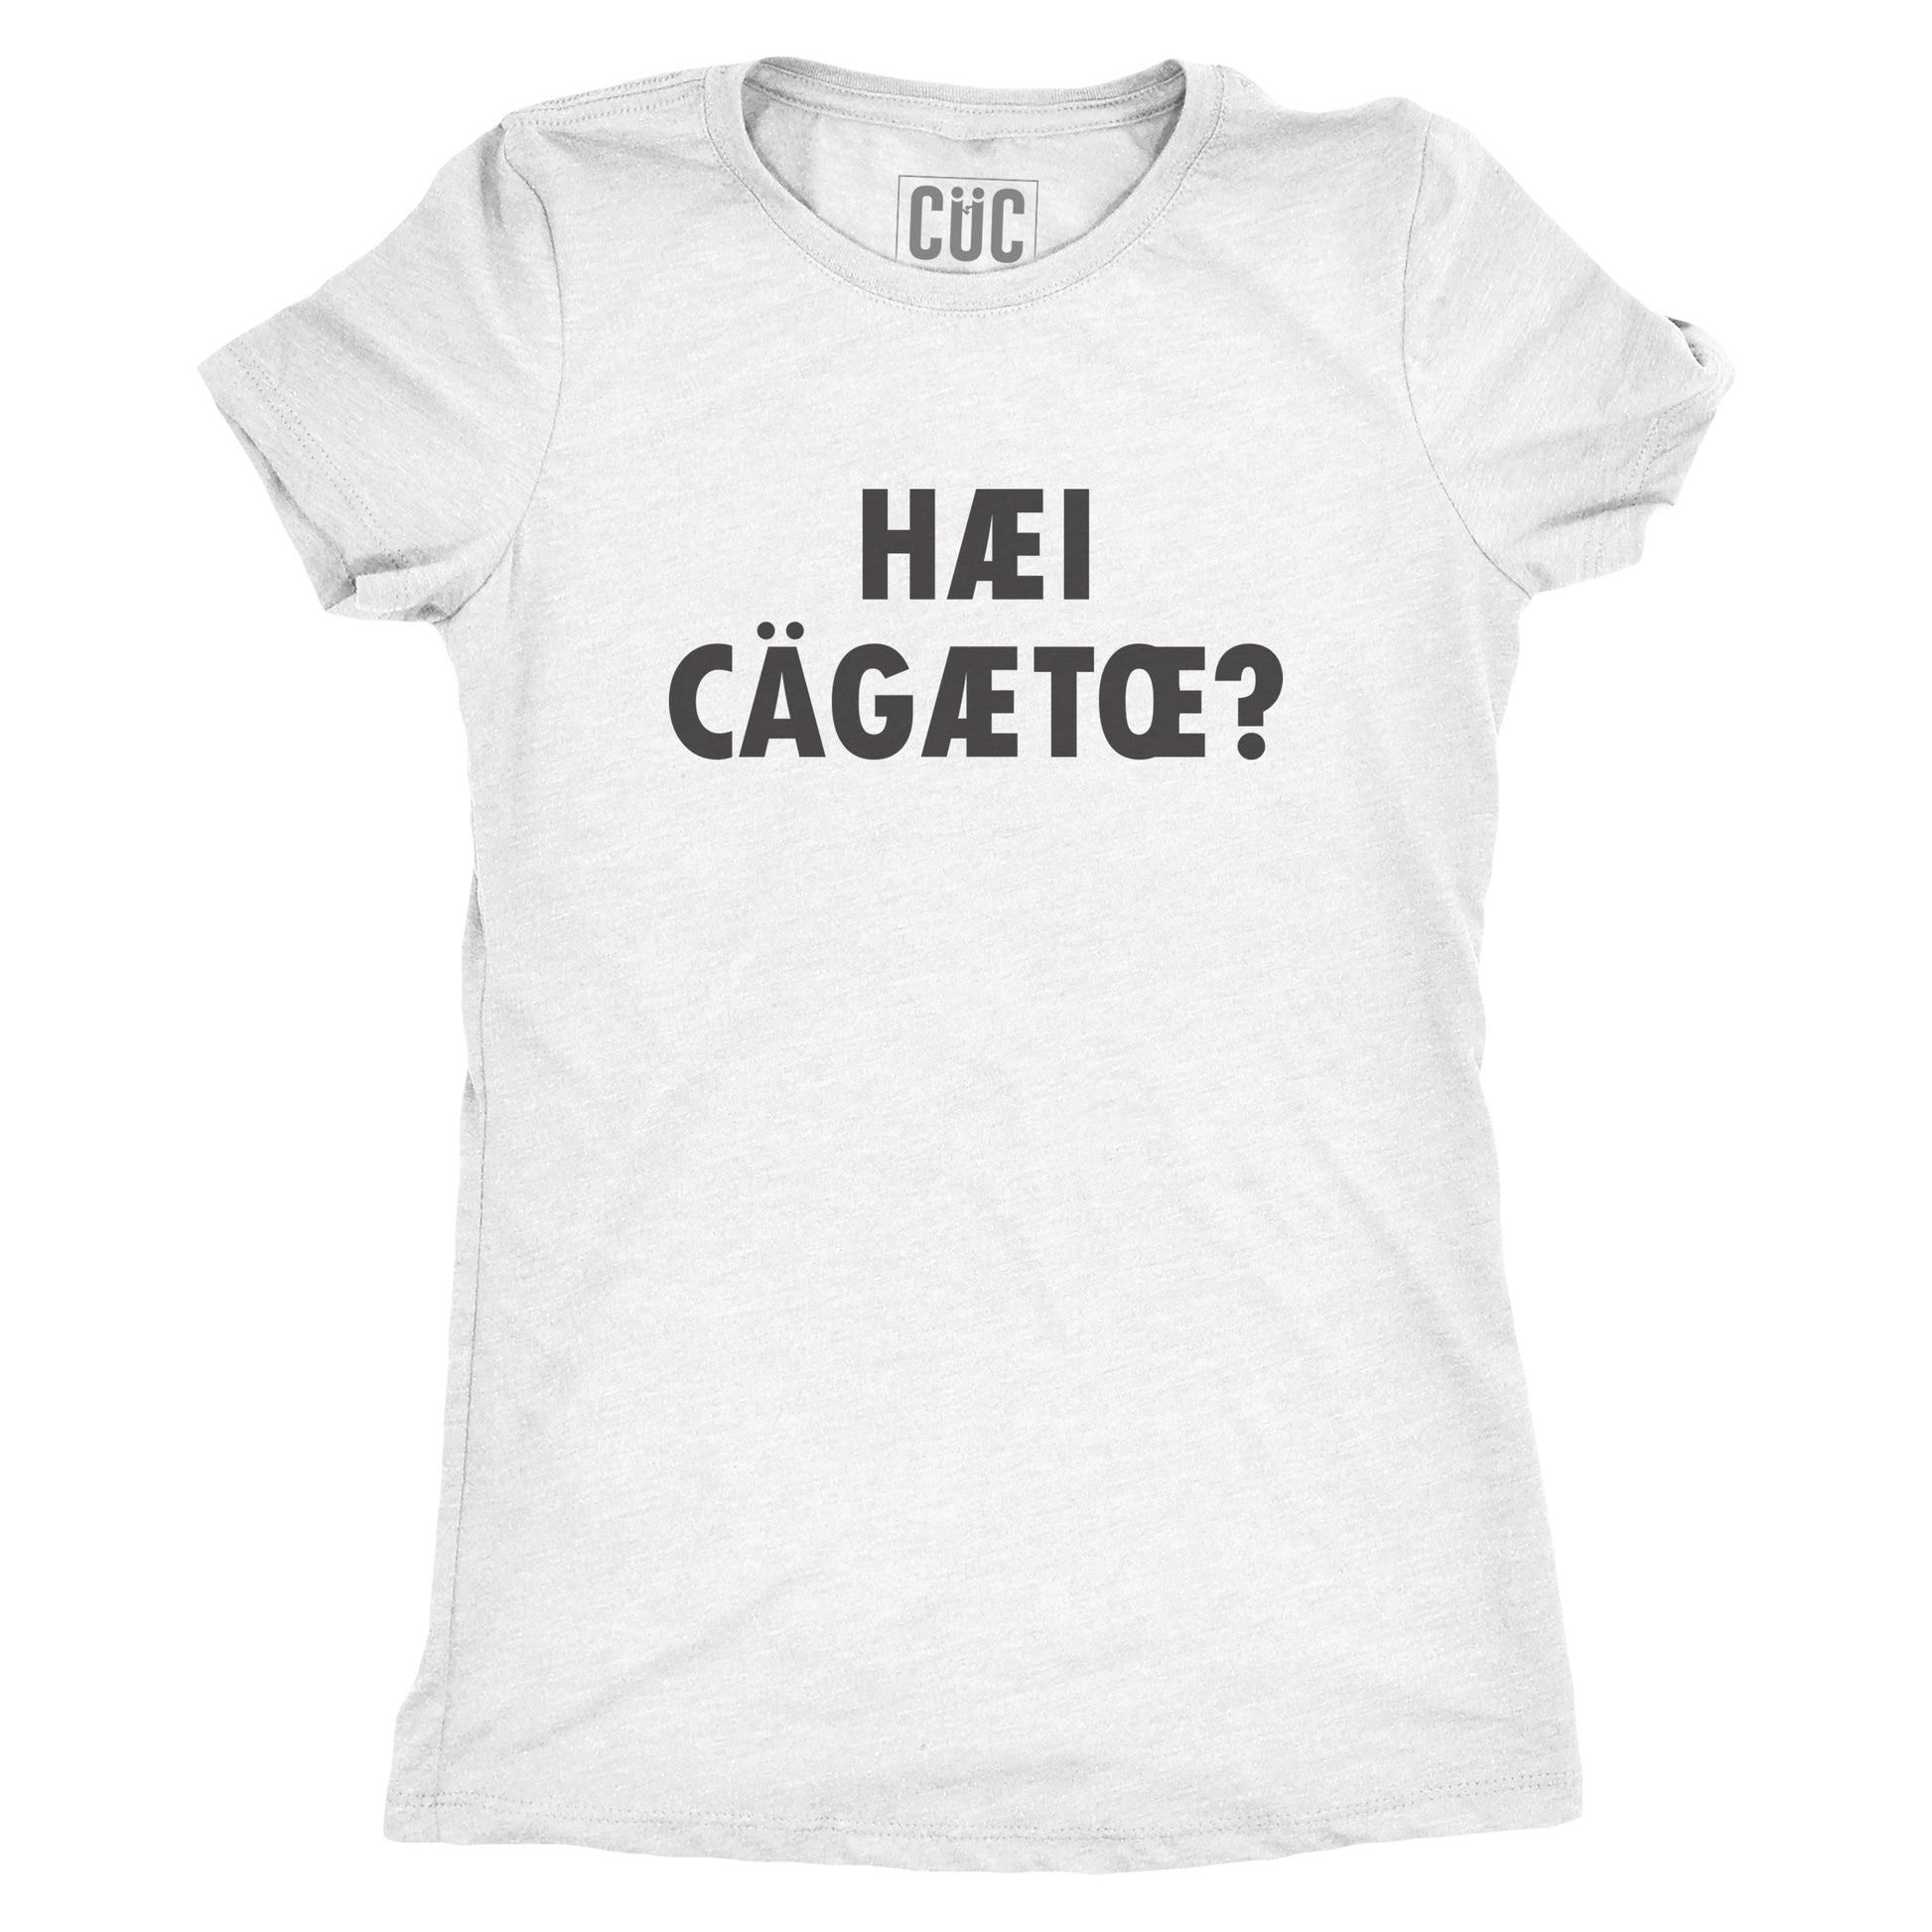 T-Shirt Hai cagxxto? - frase lol fonetica - divertente - #chooseurcolor - CUC chooseurcolor